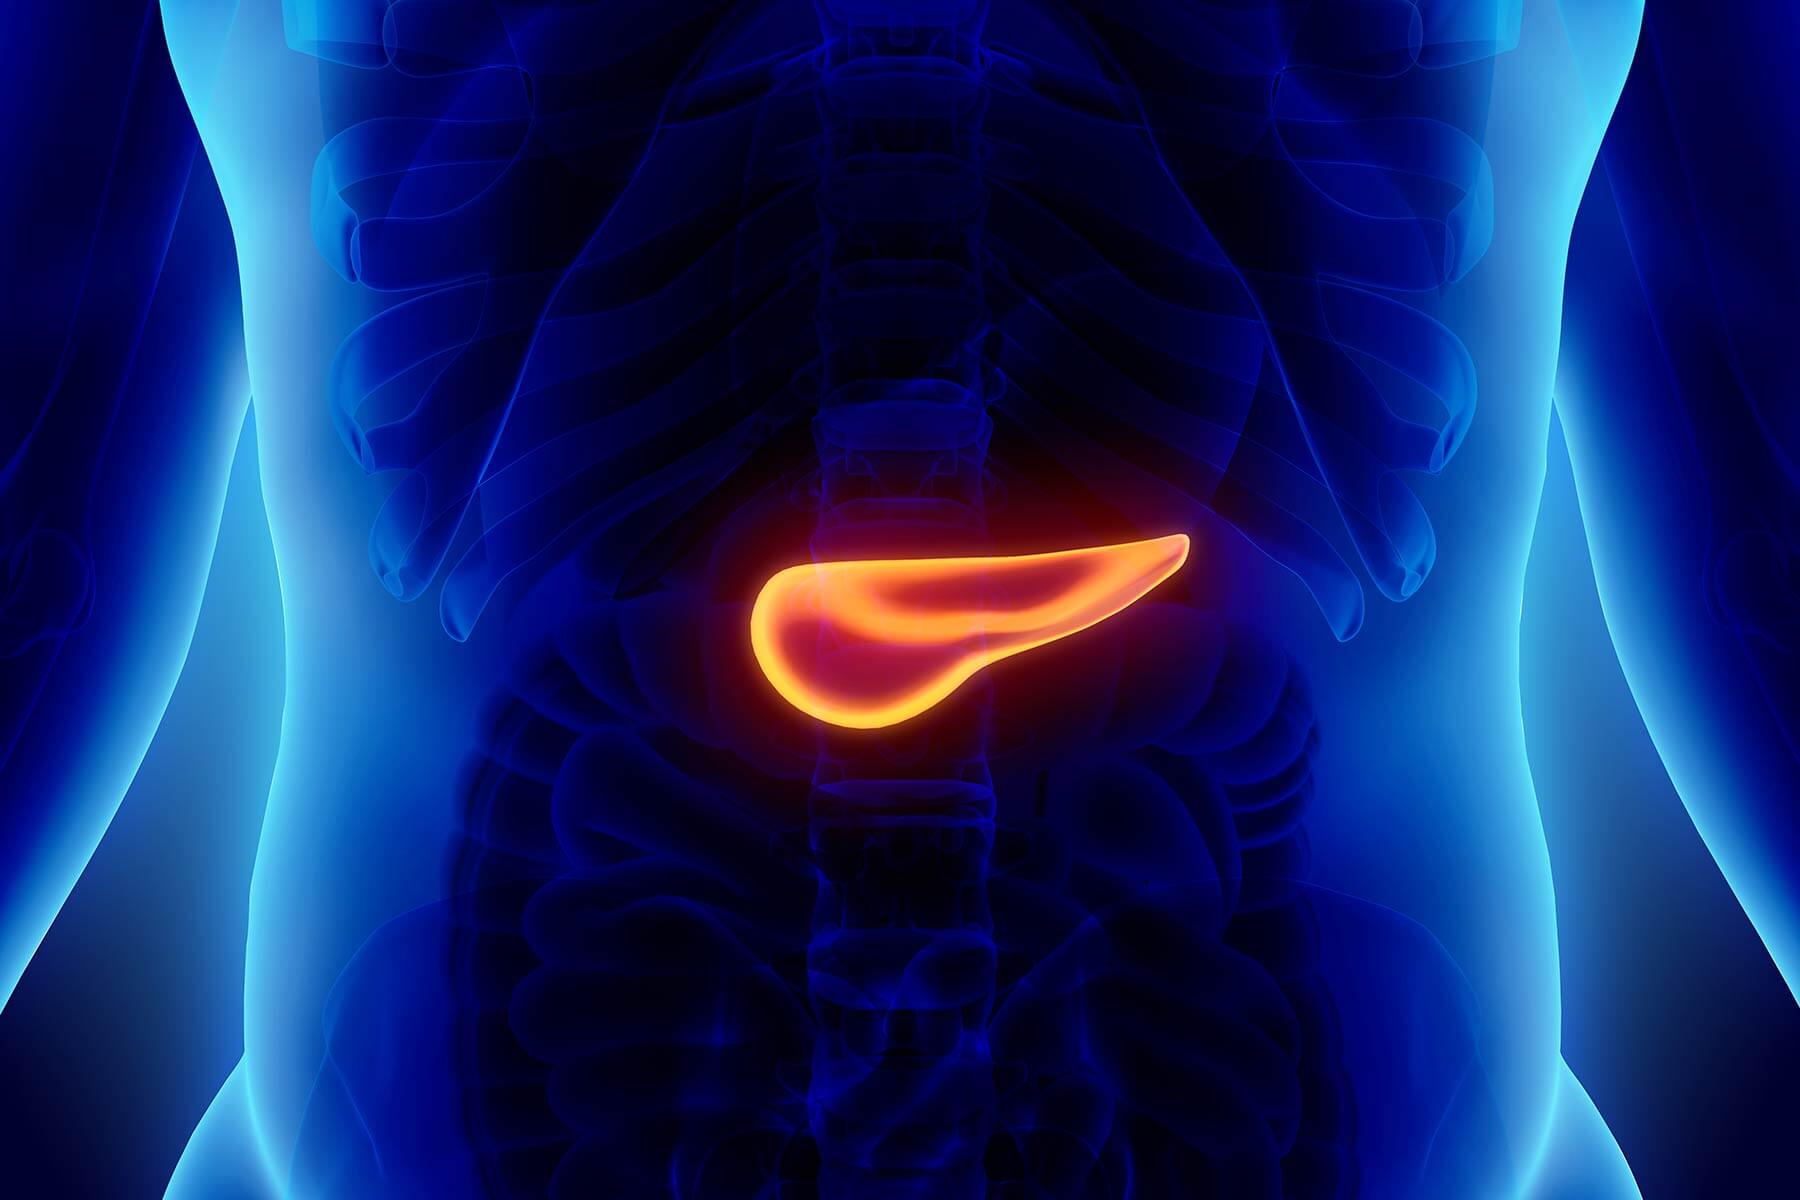 pancreatic cancer abdominal distension papule sidefate sau negi genitale